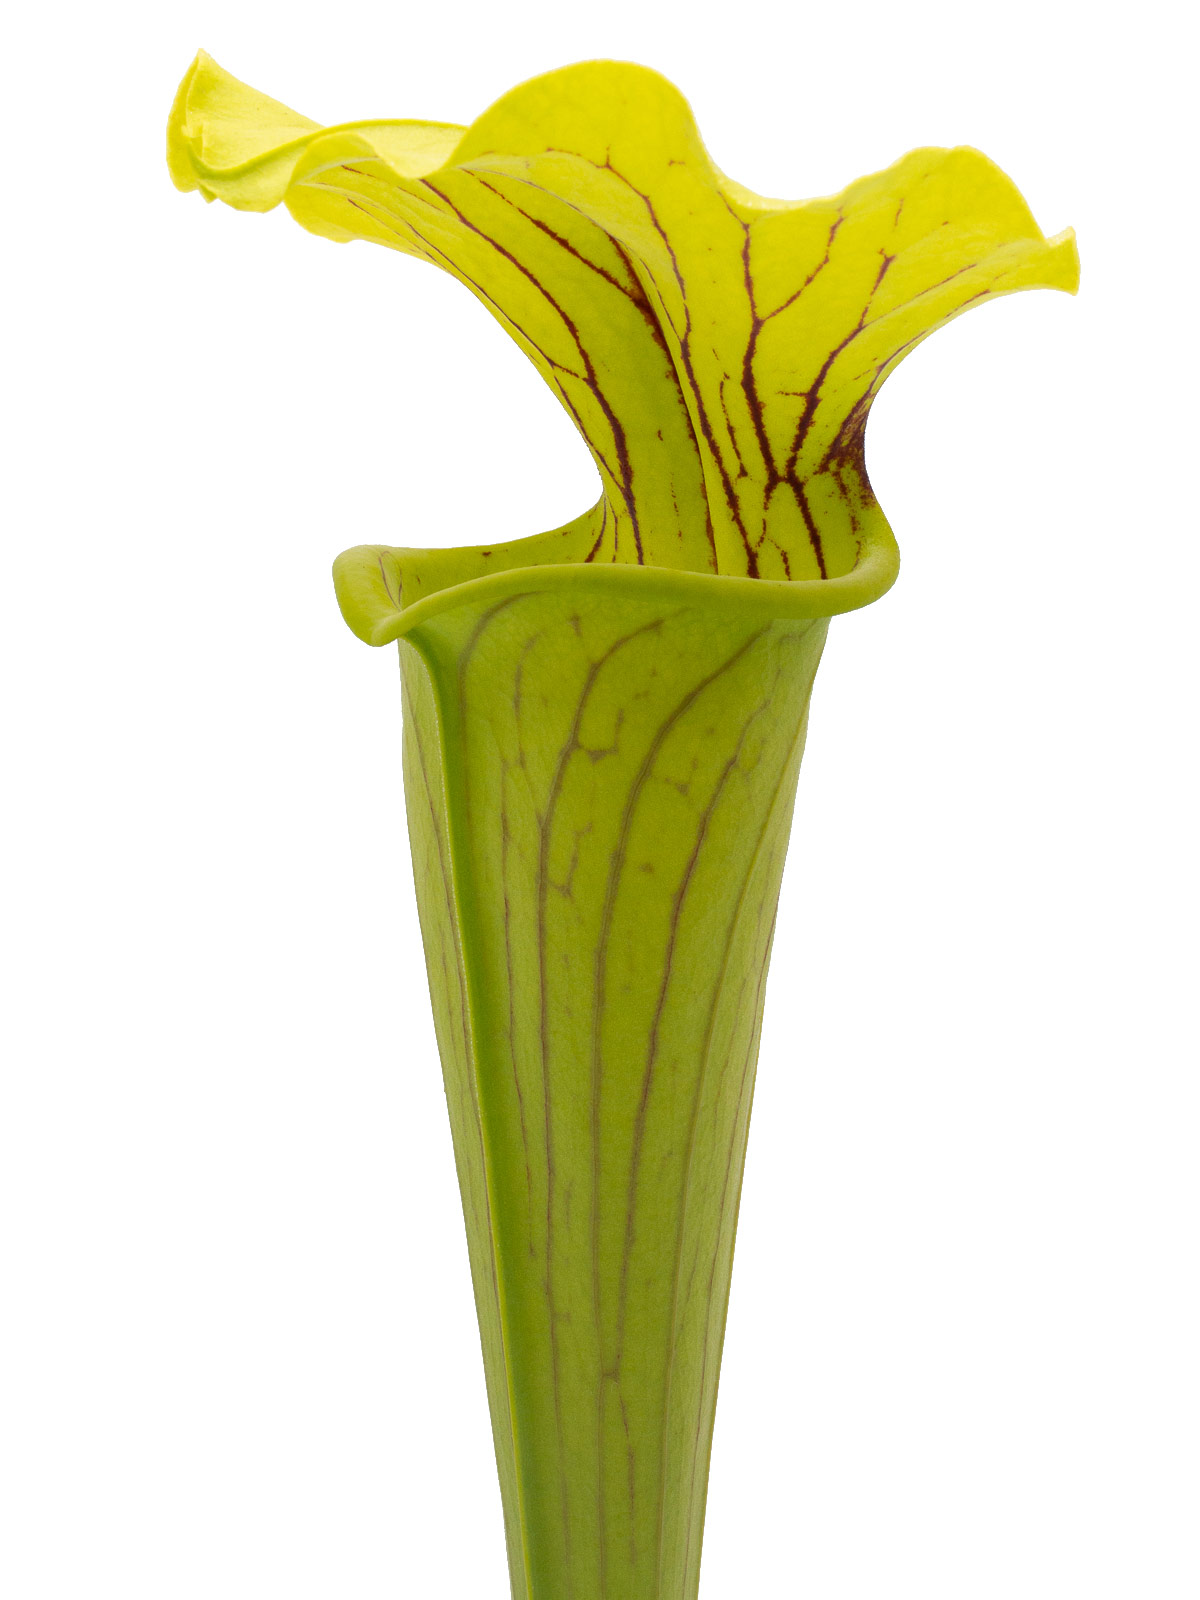 Sarracenia alata x flava var. maxima - Giant form